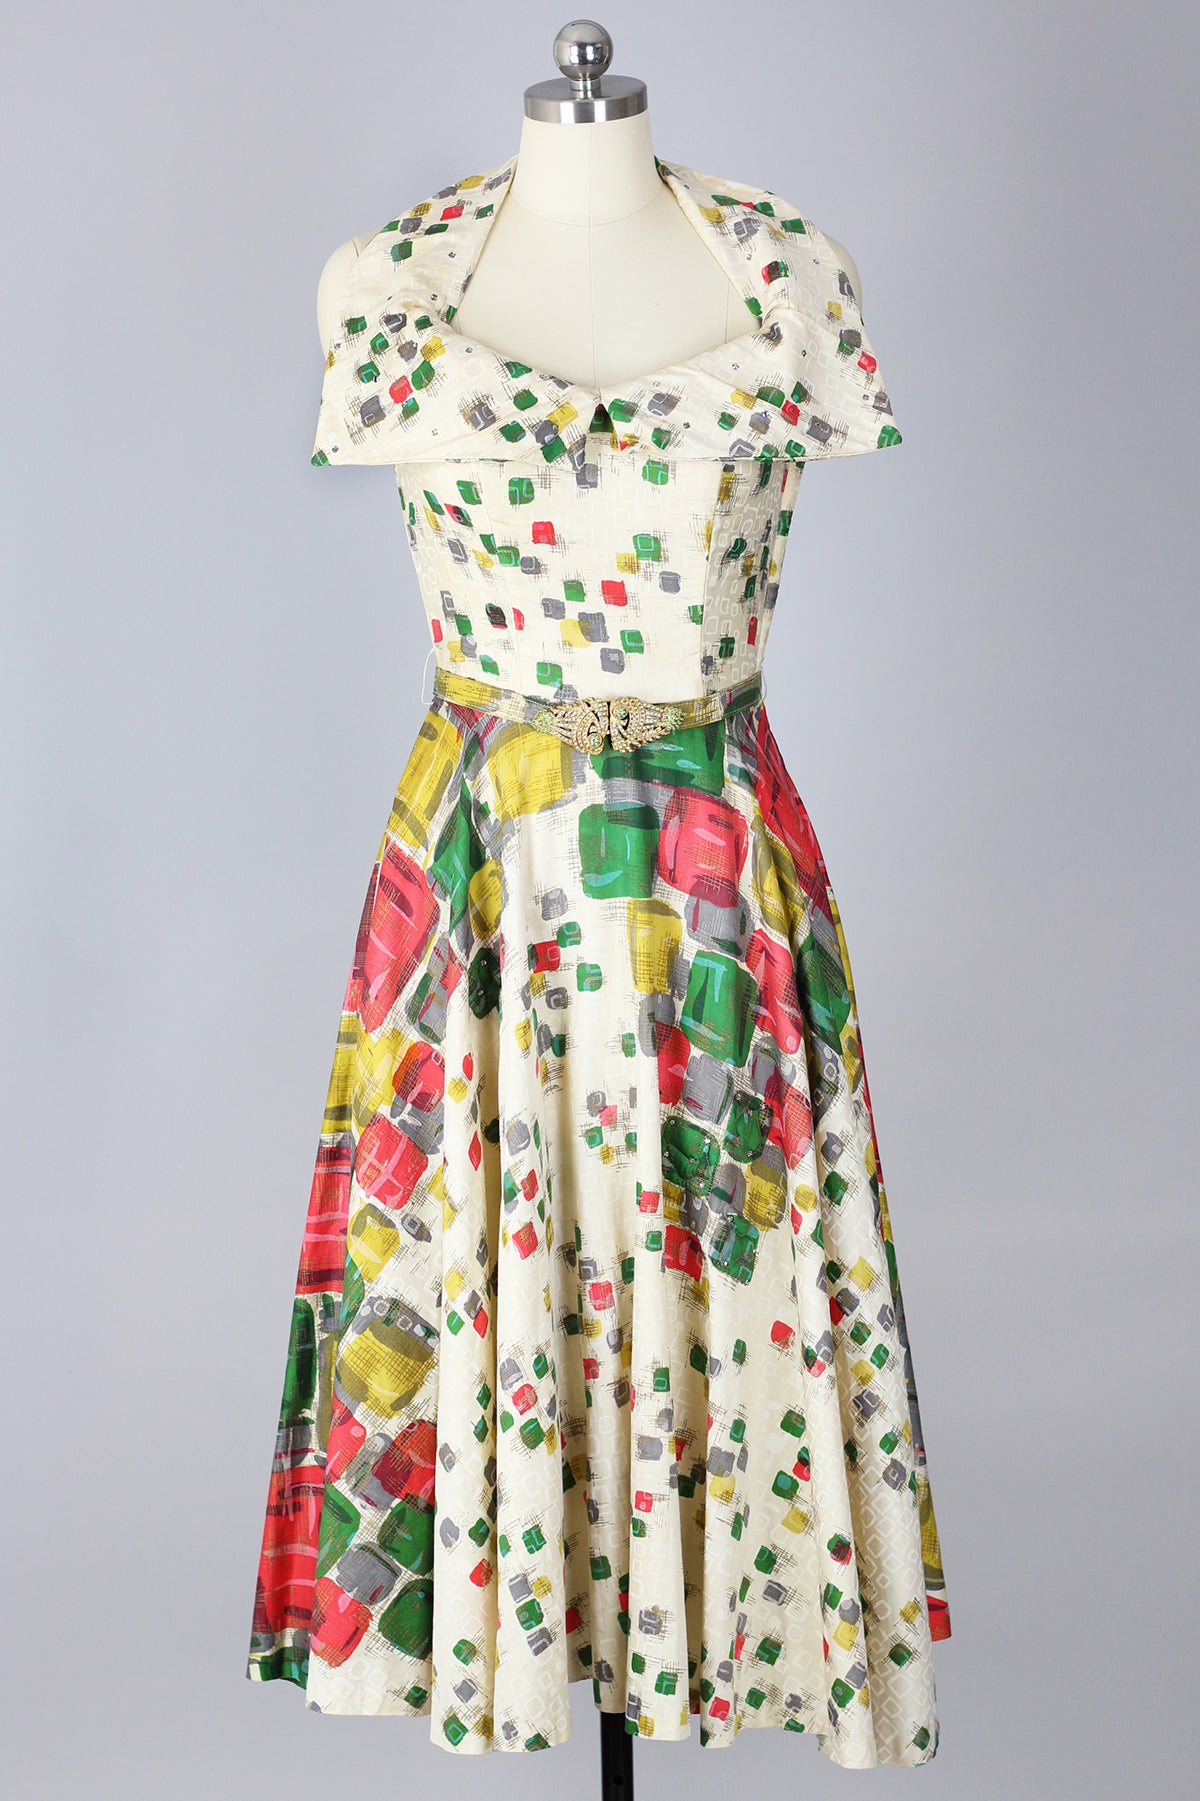 RARE! Incredible 1950s Halter Dress with Graphic Print & Rhinestones